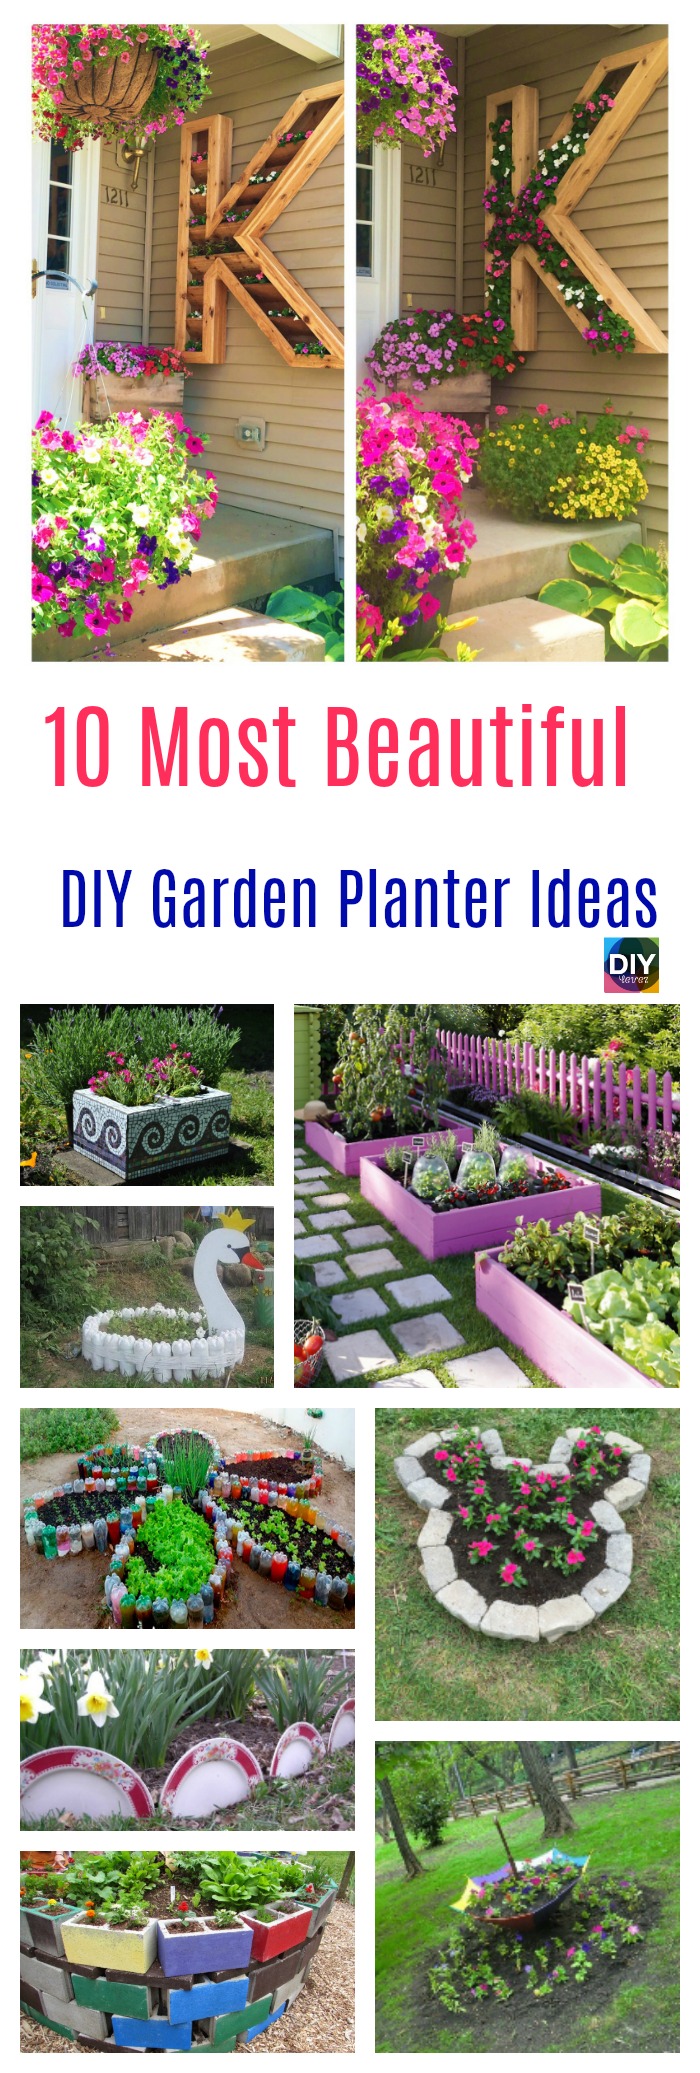 10 Most Beautiful DIY Garden Planter Ideas - DIY 4 EVER